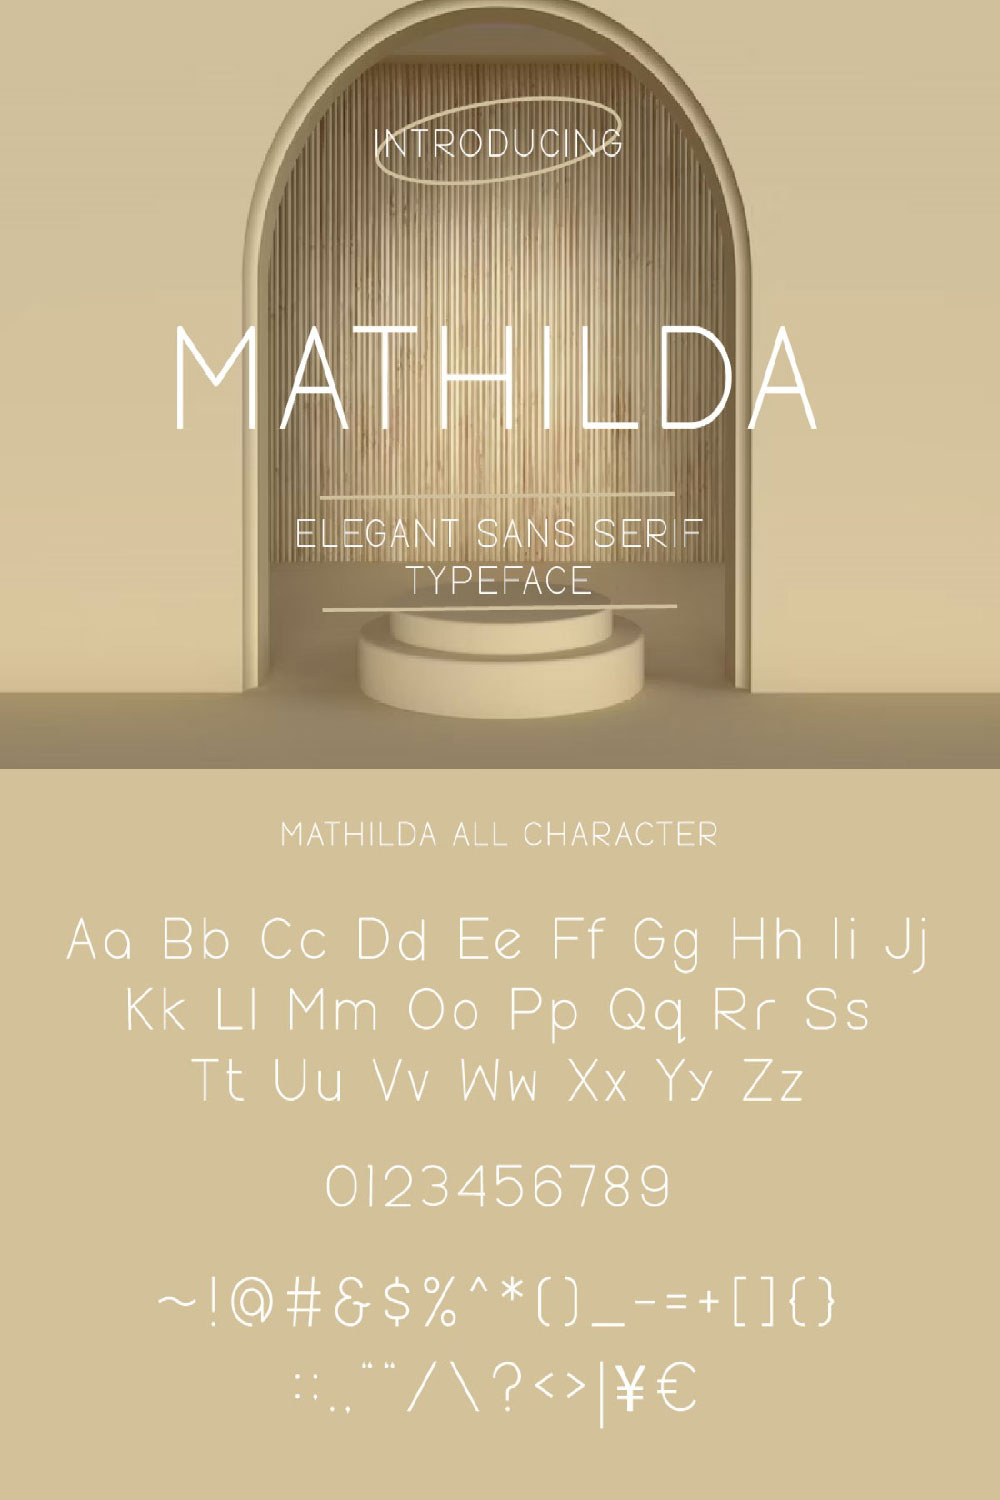 Mathilda Elegant Sans Serif Font pinterest preview image.